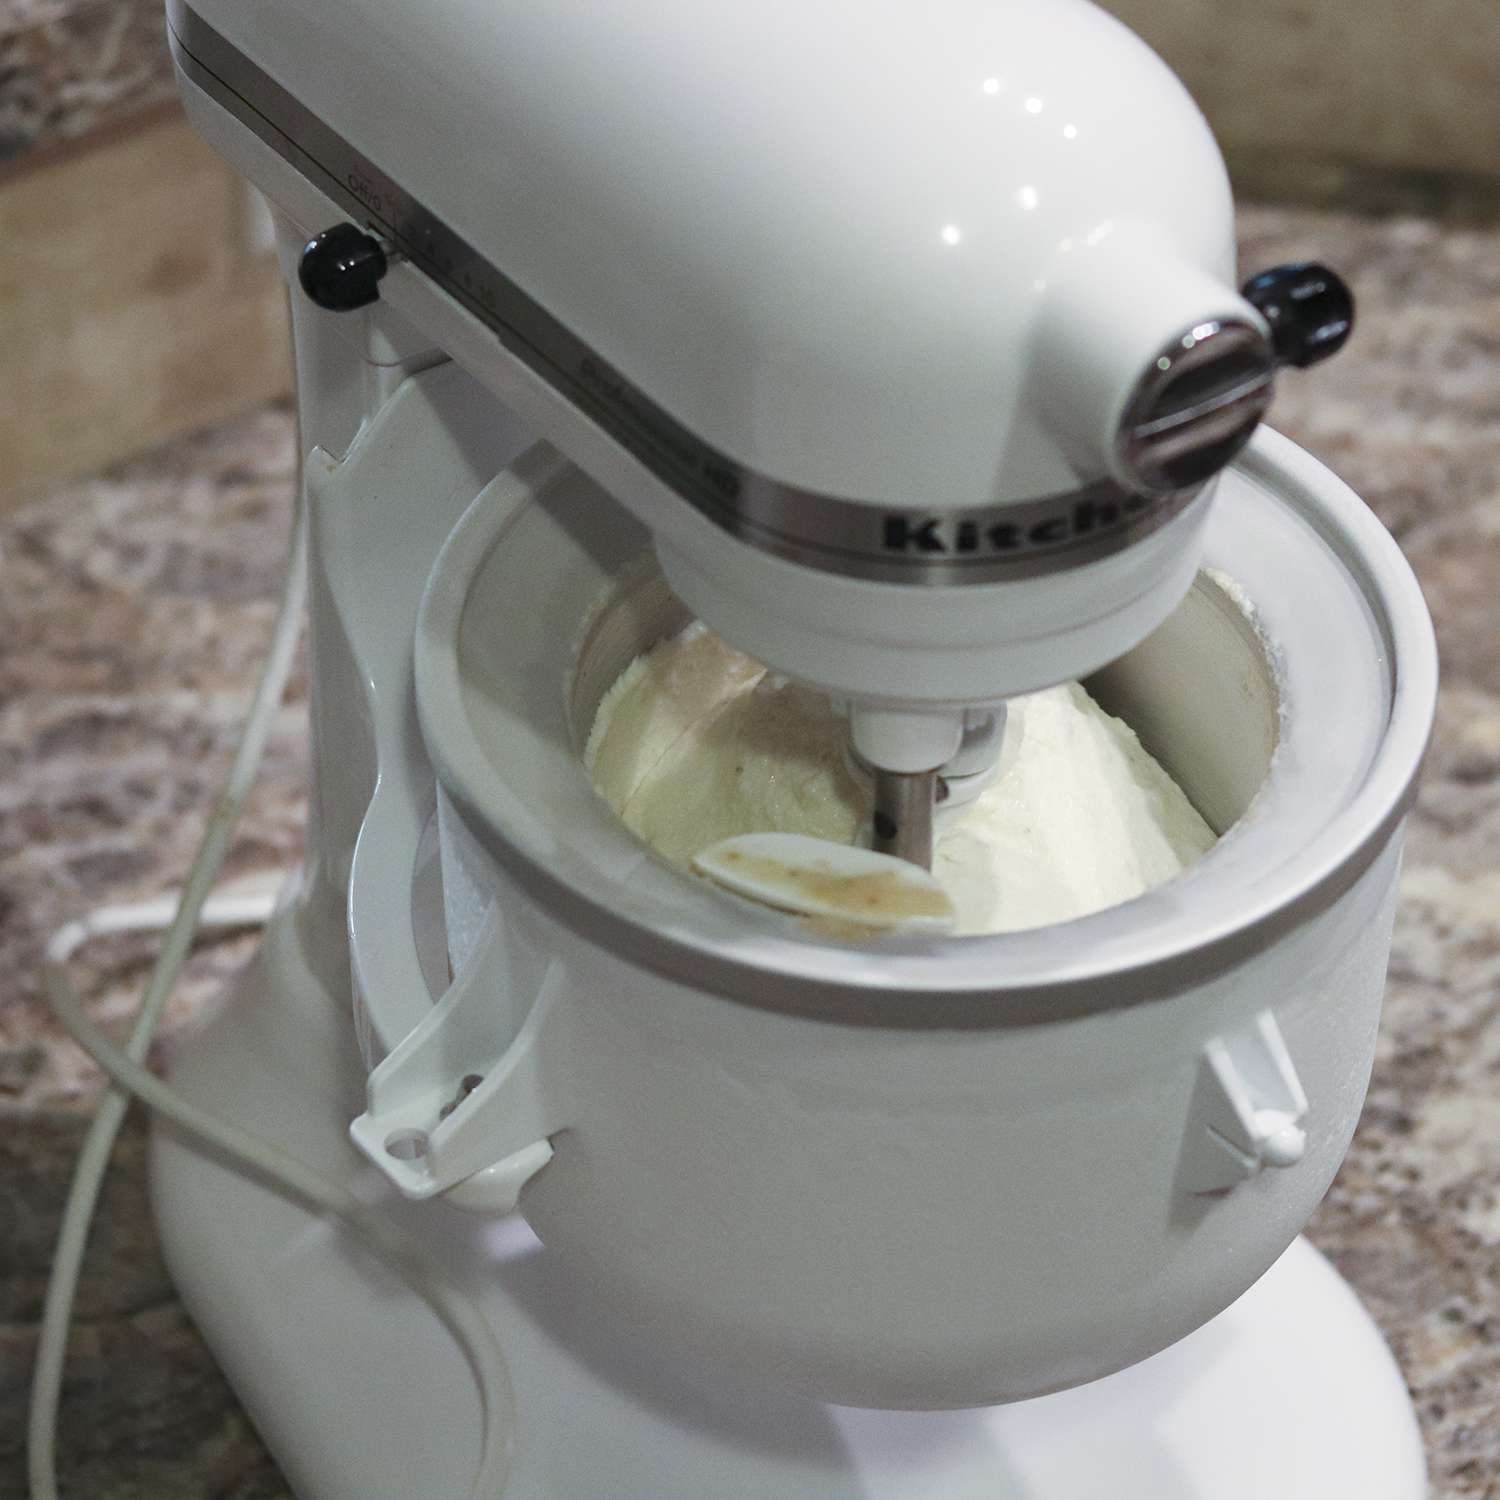 How To Make Ice Cream With Kitchenaid Ice Cream Maker